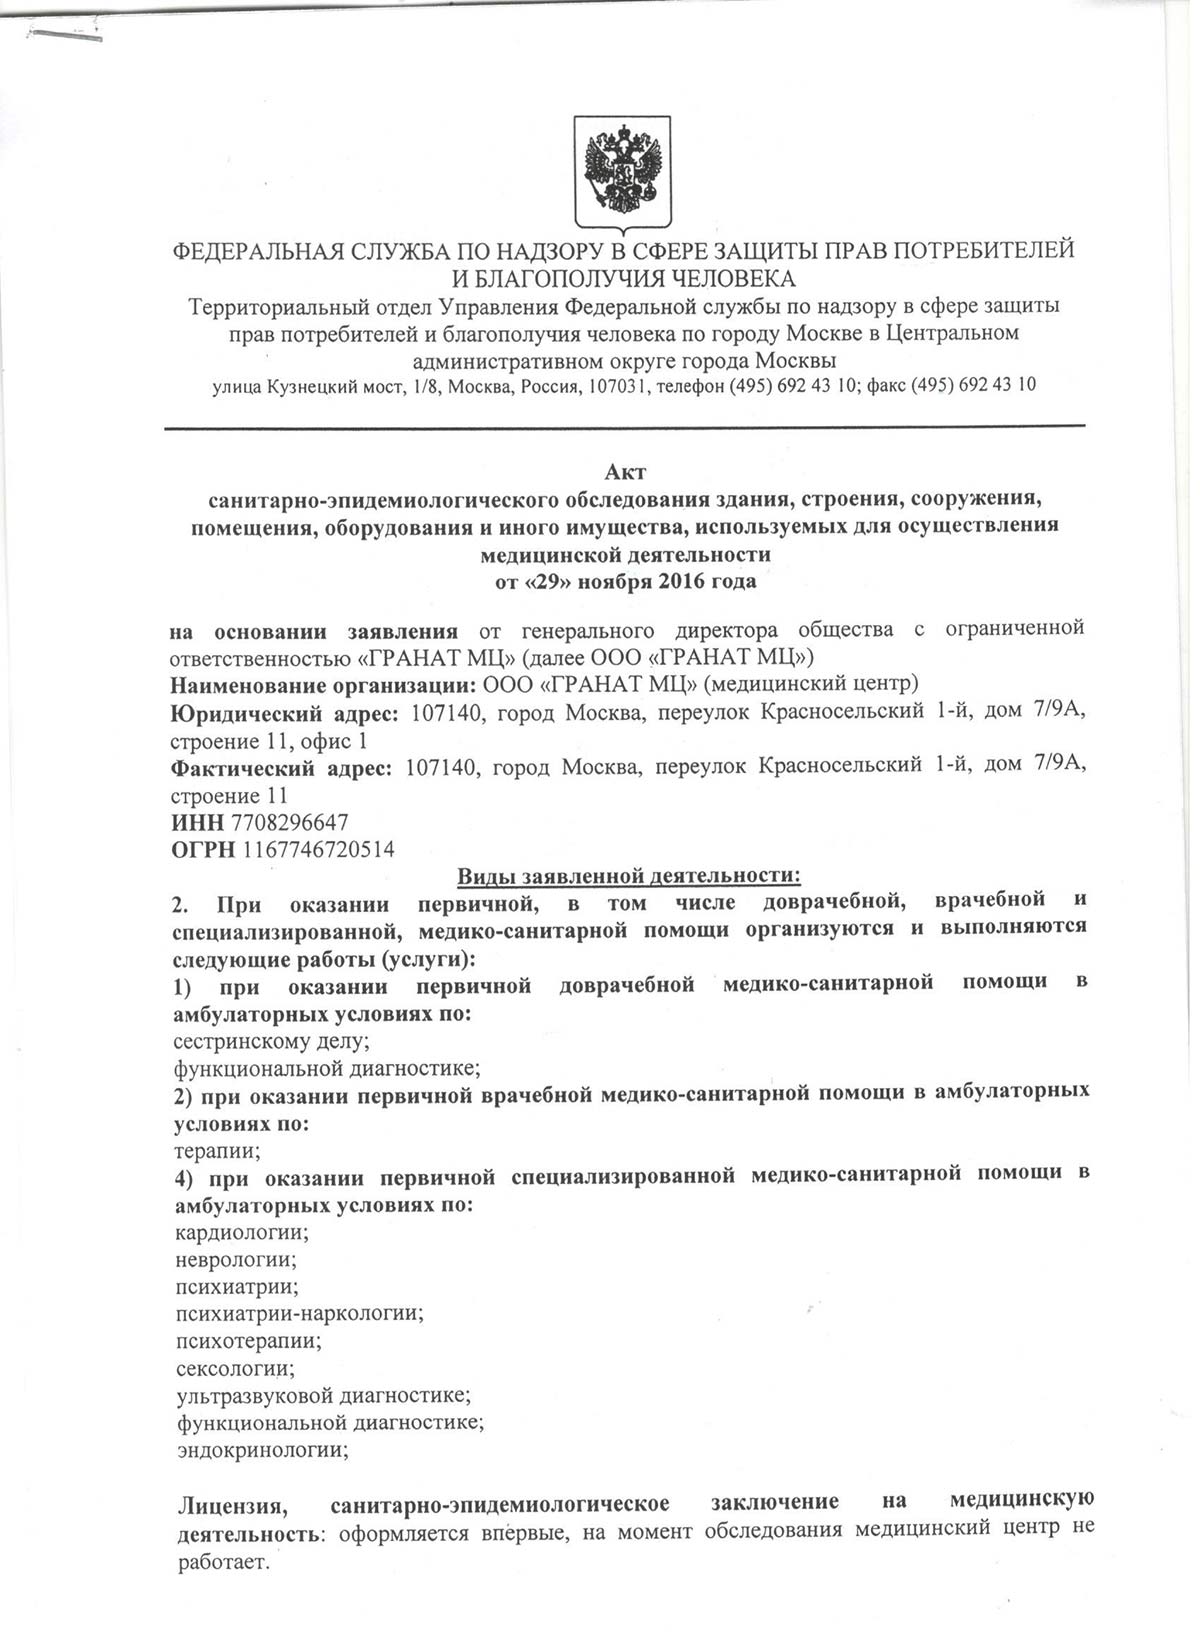 Лицензия центра Гранат № ЛО-77-01-008539